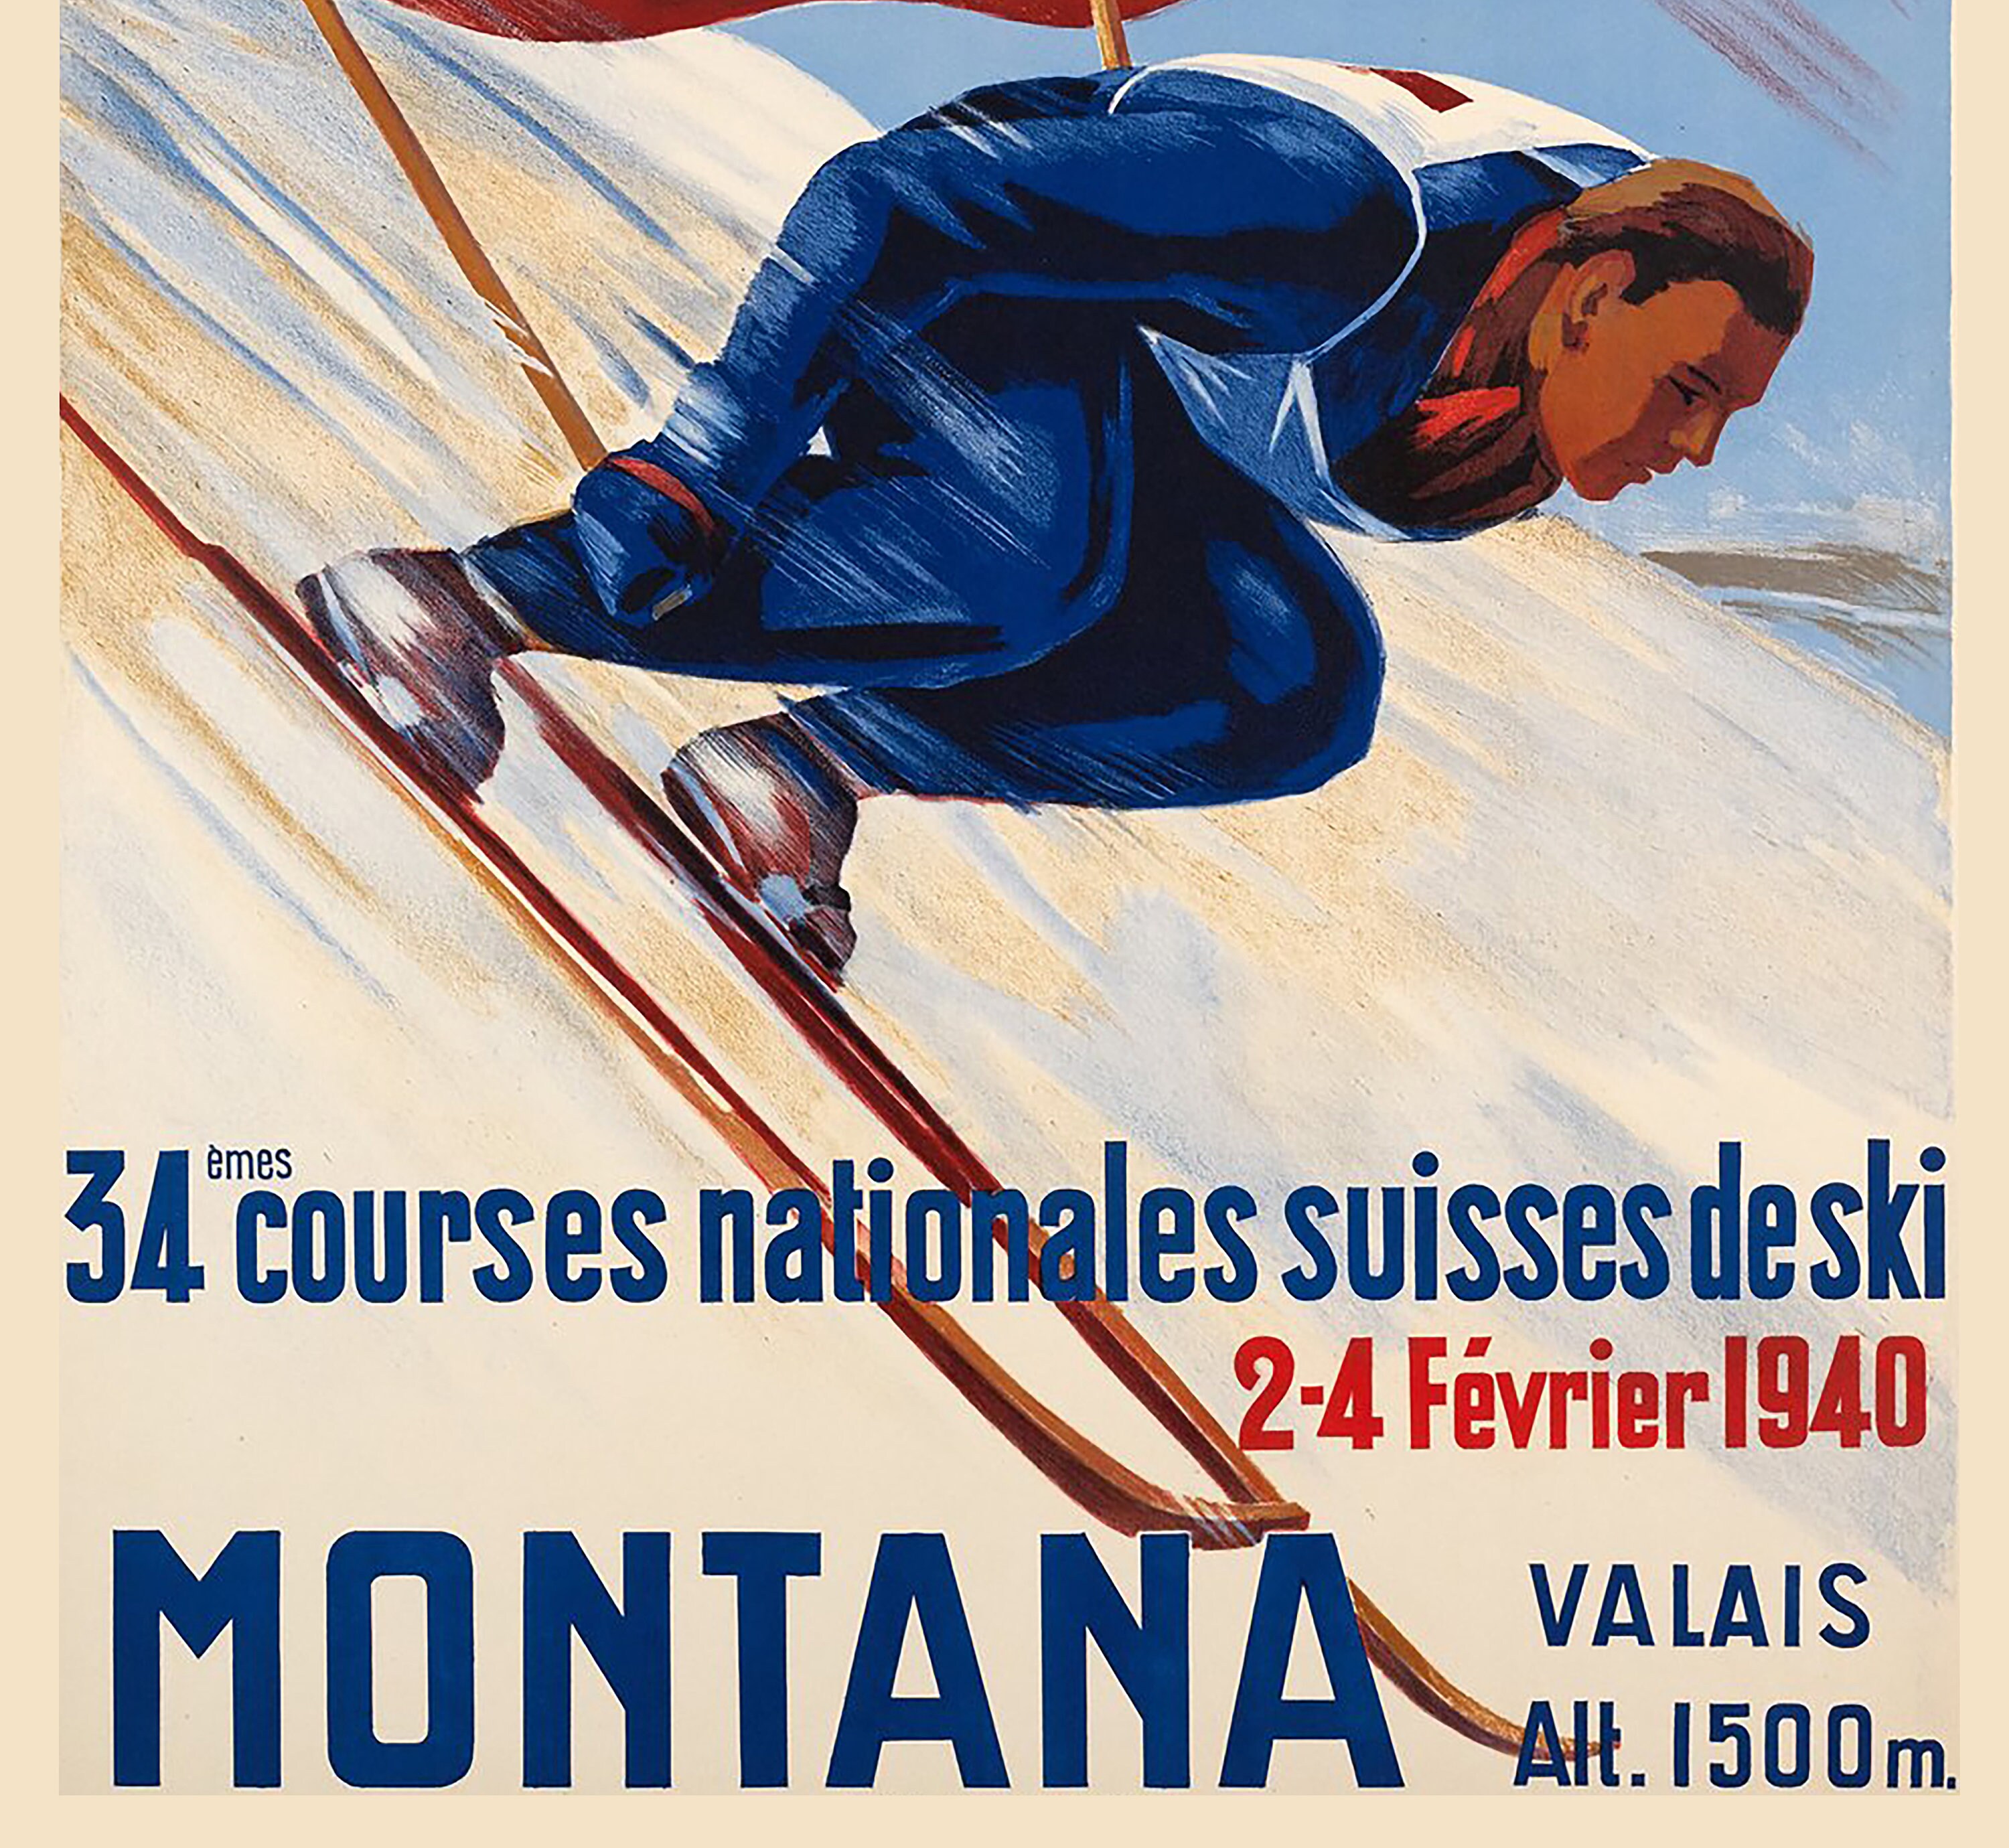 Montana Valais vintage ski resort race travel poster repro 12x18 